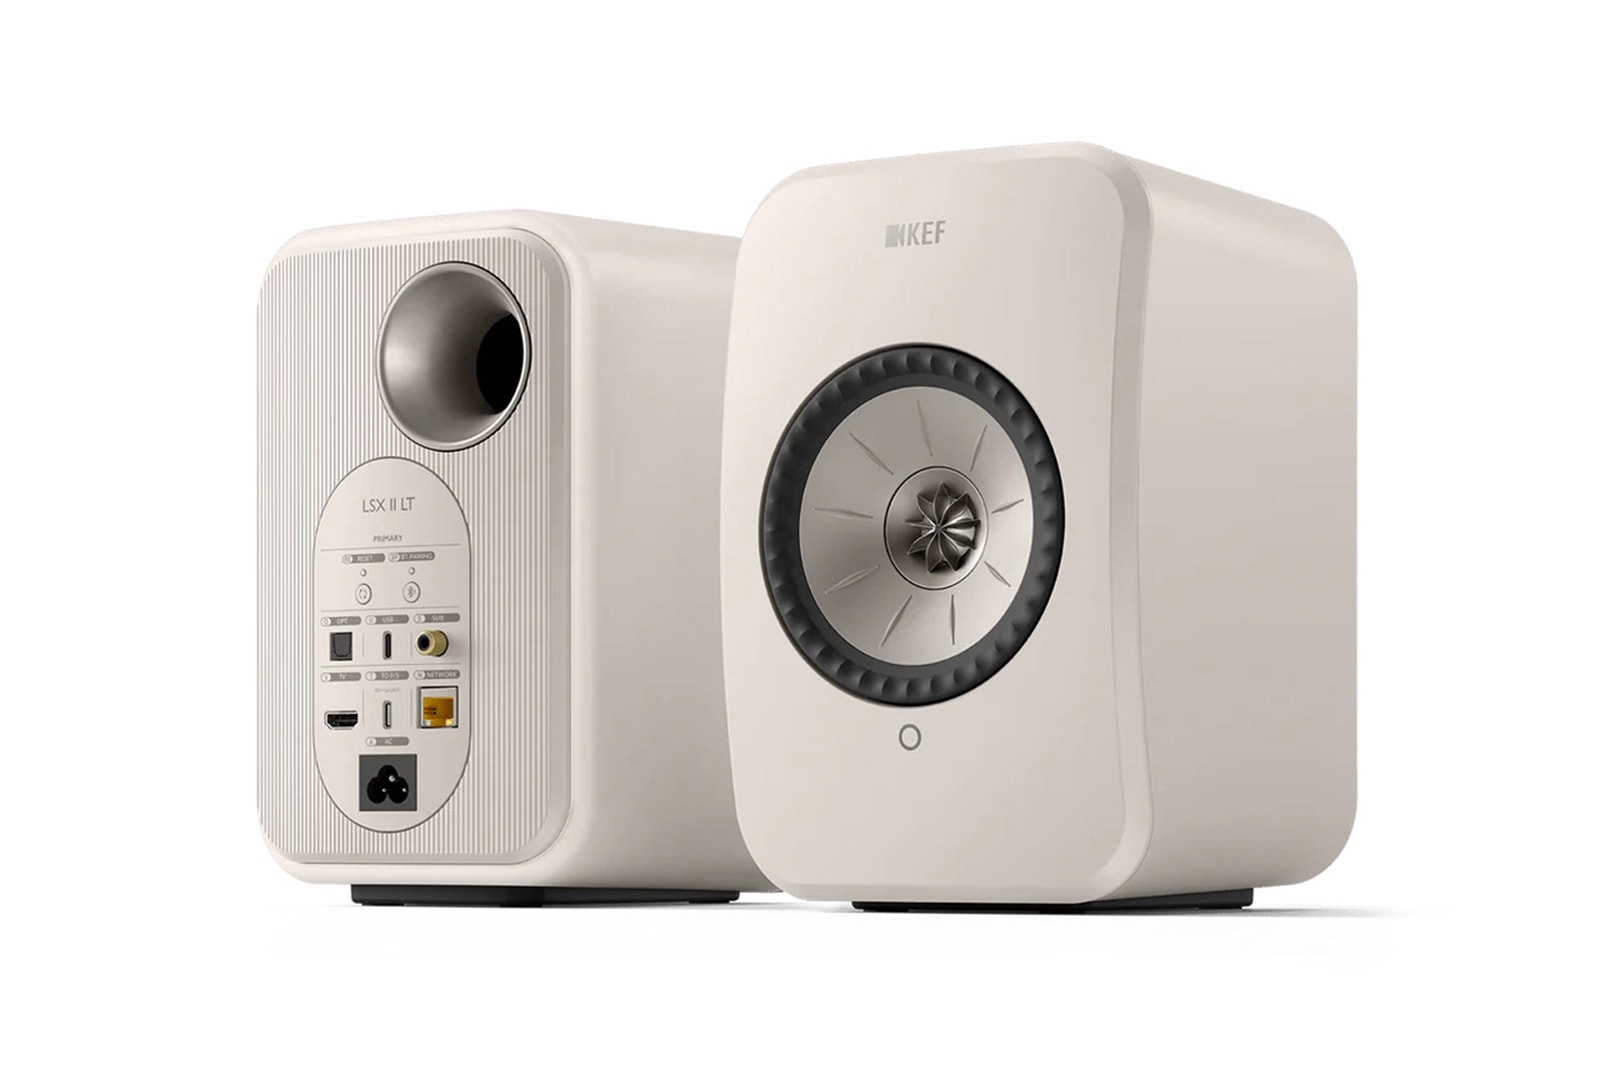 KEF Launches New LSX II LT Wireless Speakers Hifi Audiophile 